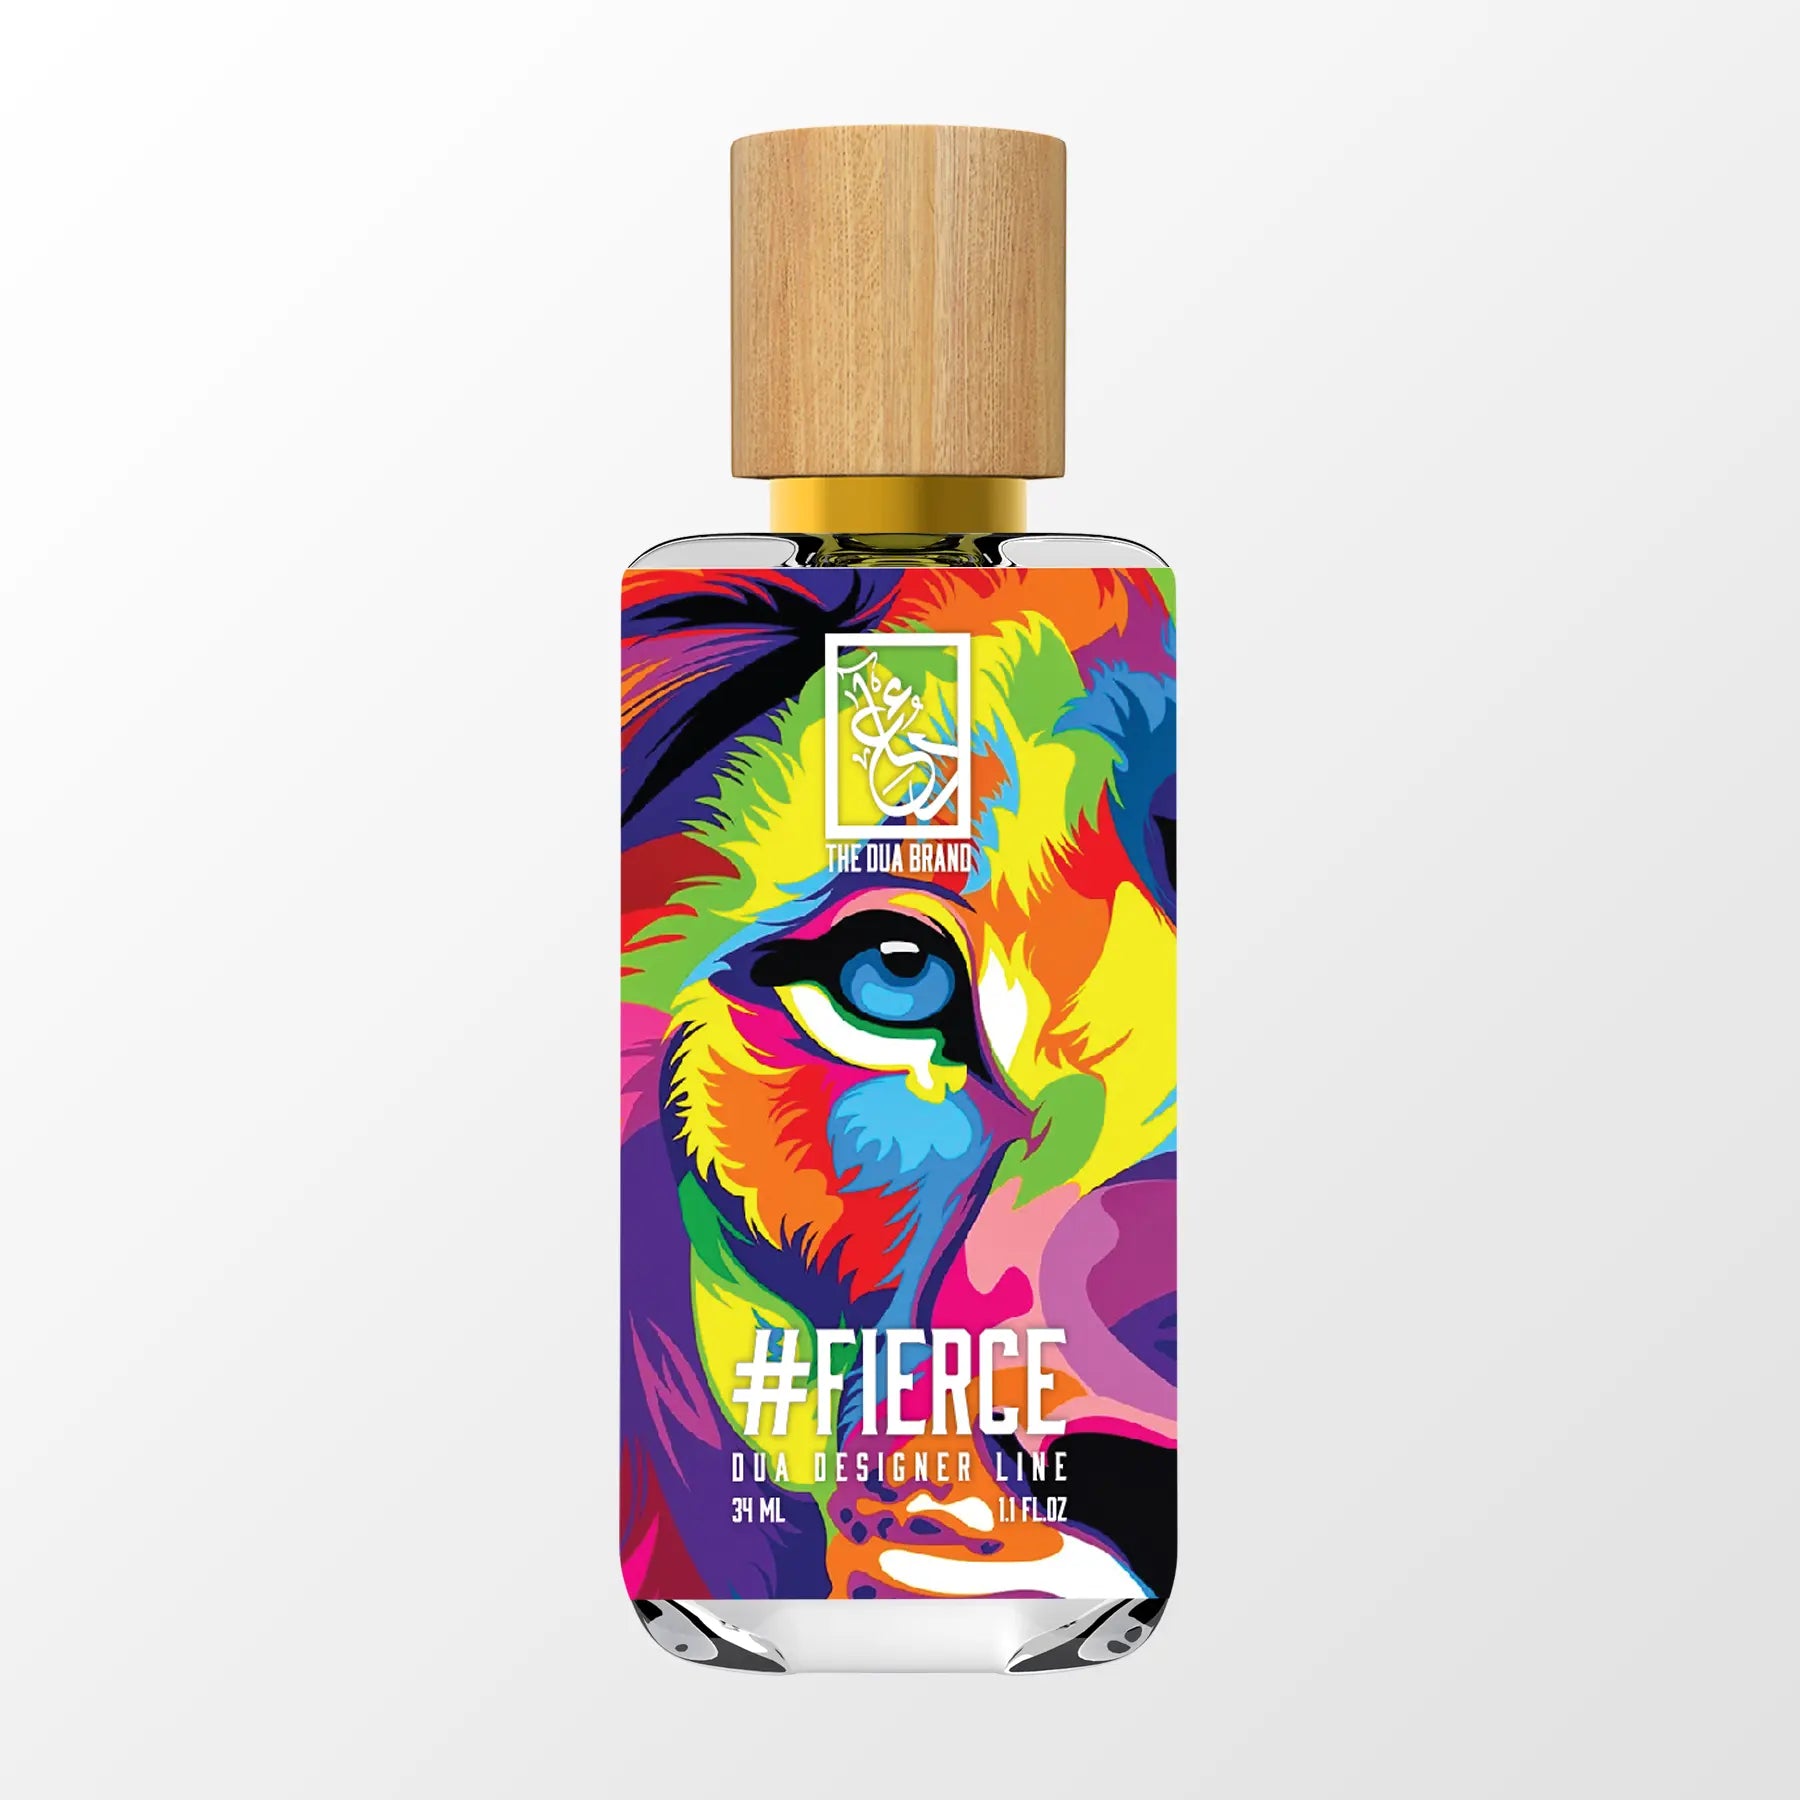 Designer Fragrance Sampler for Men - Lot x 12 Cologne Vials with Deluxe  Mini Bottle